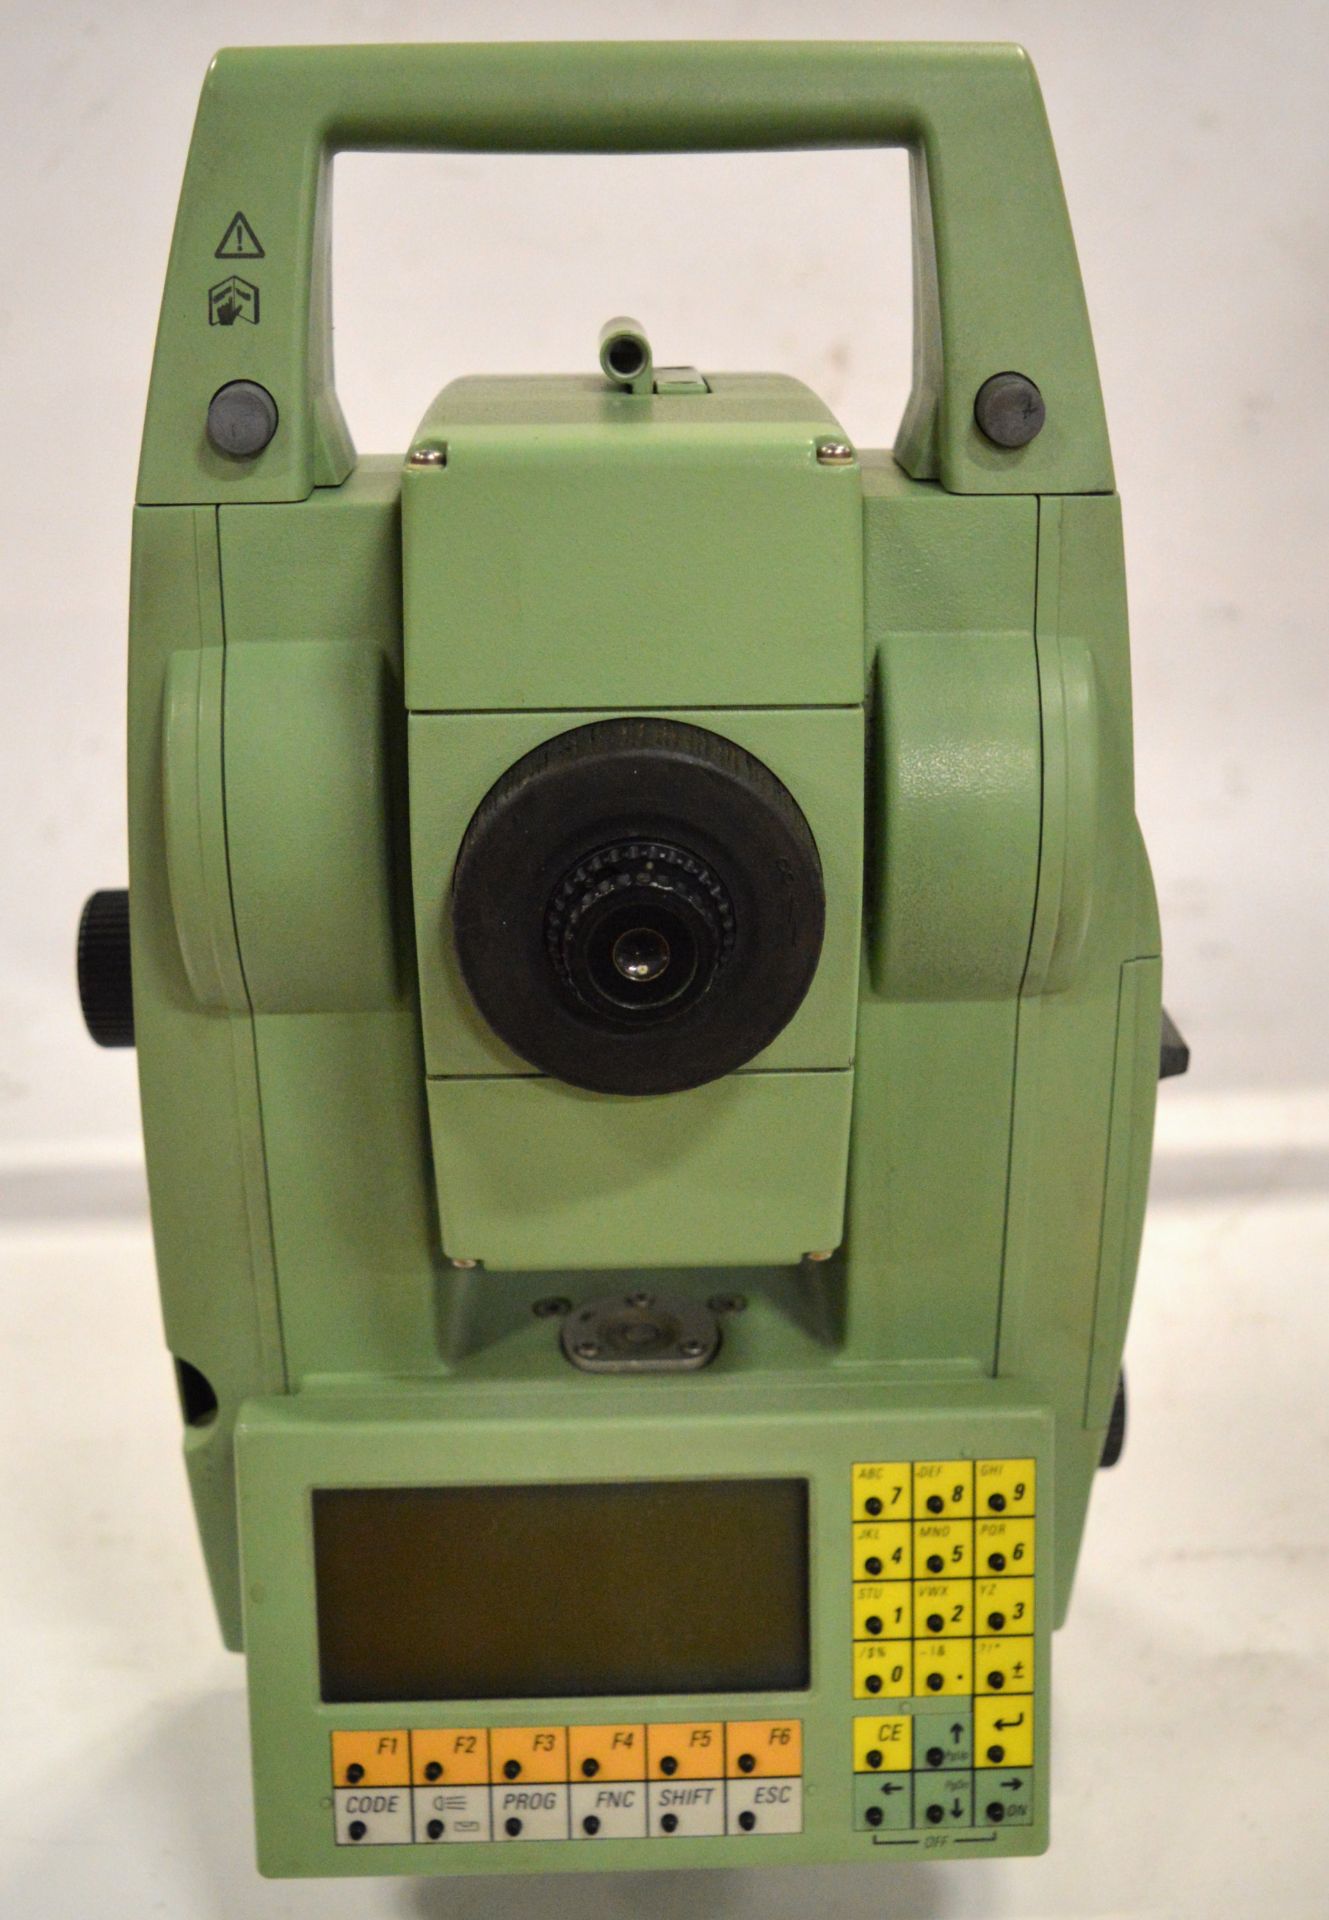 Leica TCRA1103 Surveying Equipment. - Image 2 of 5